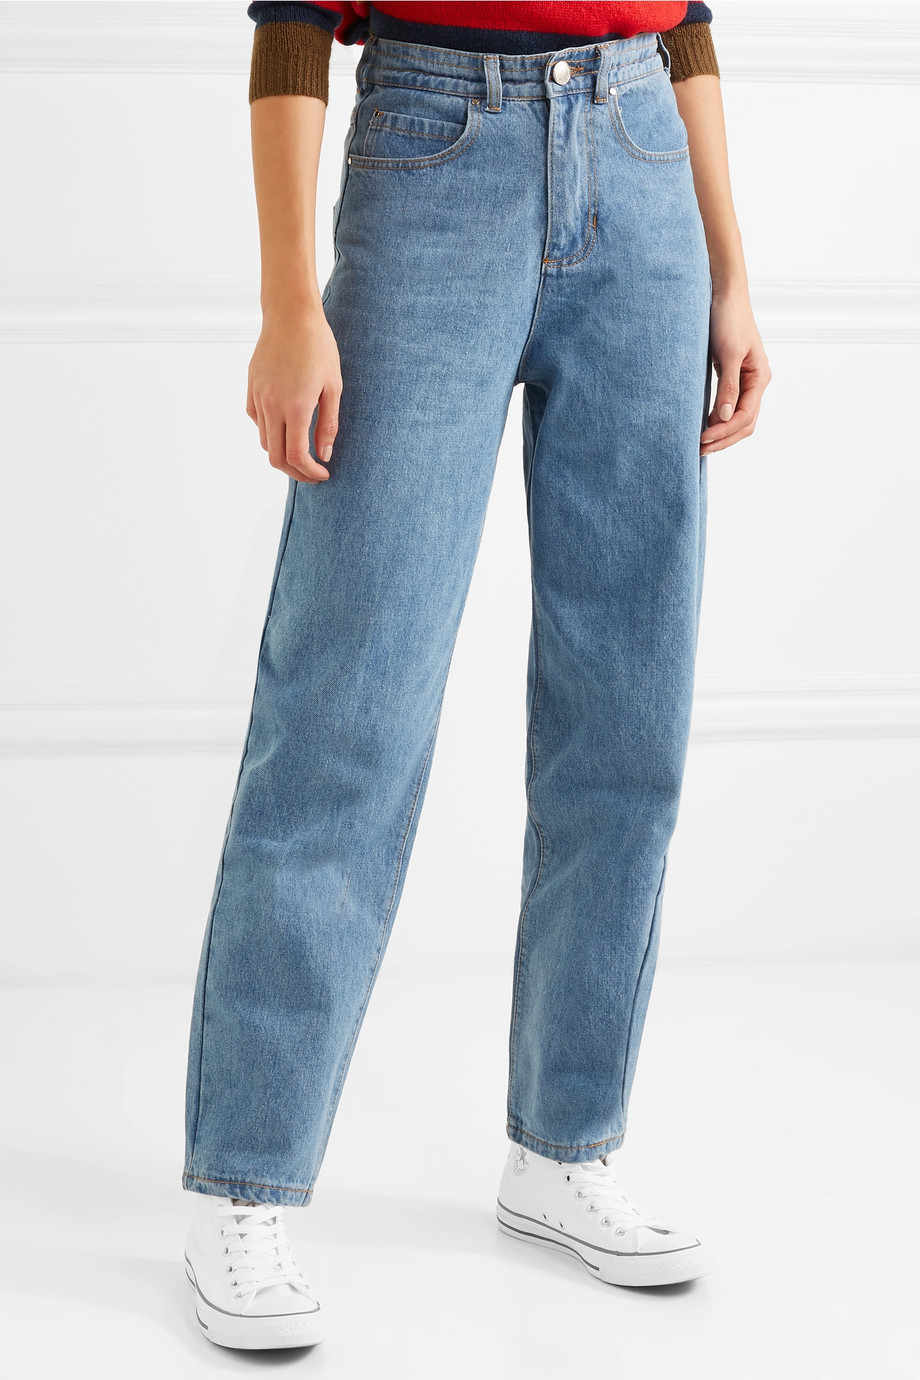 elastic for jeans waist